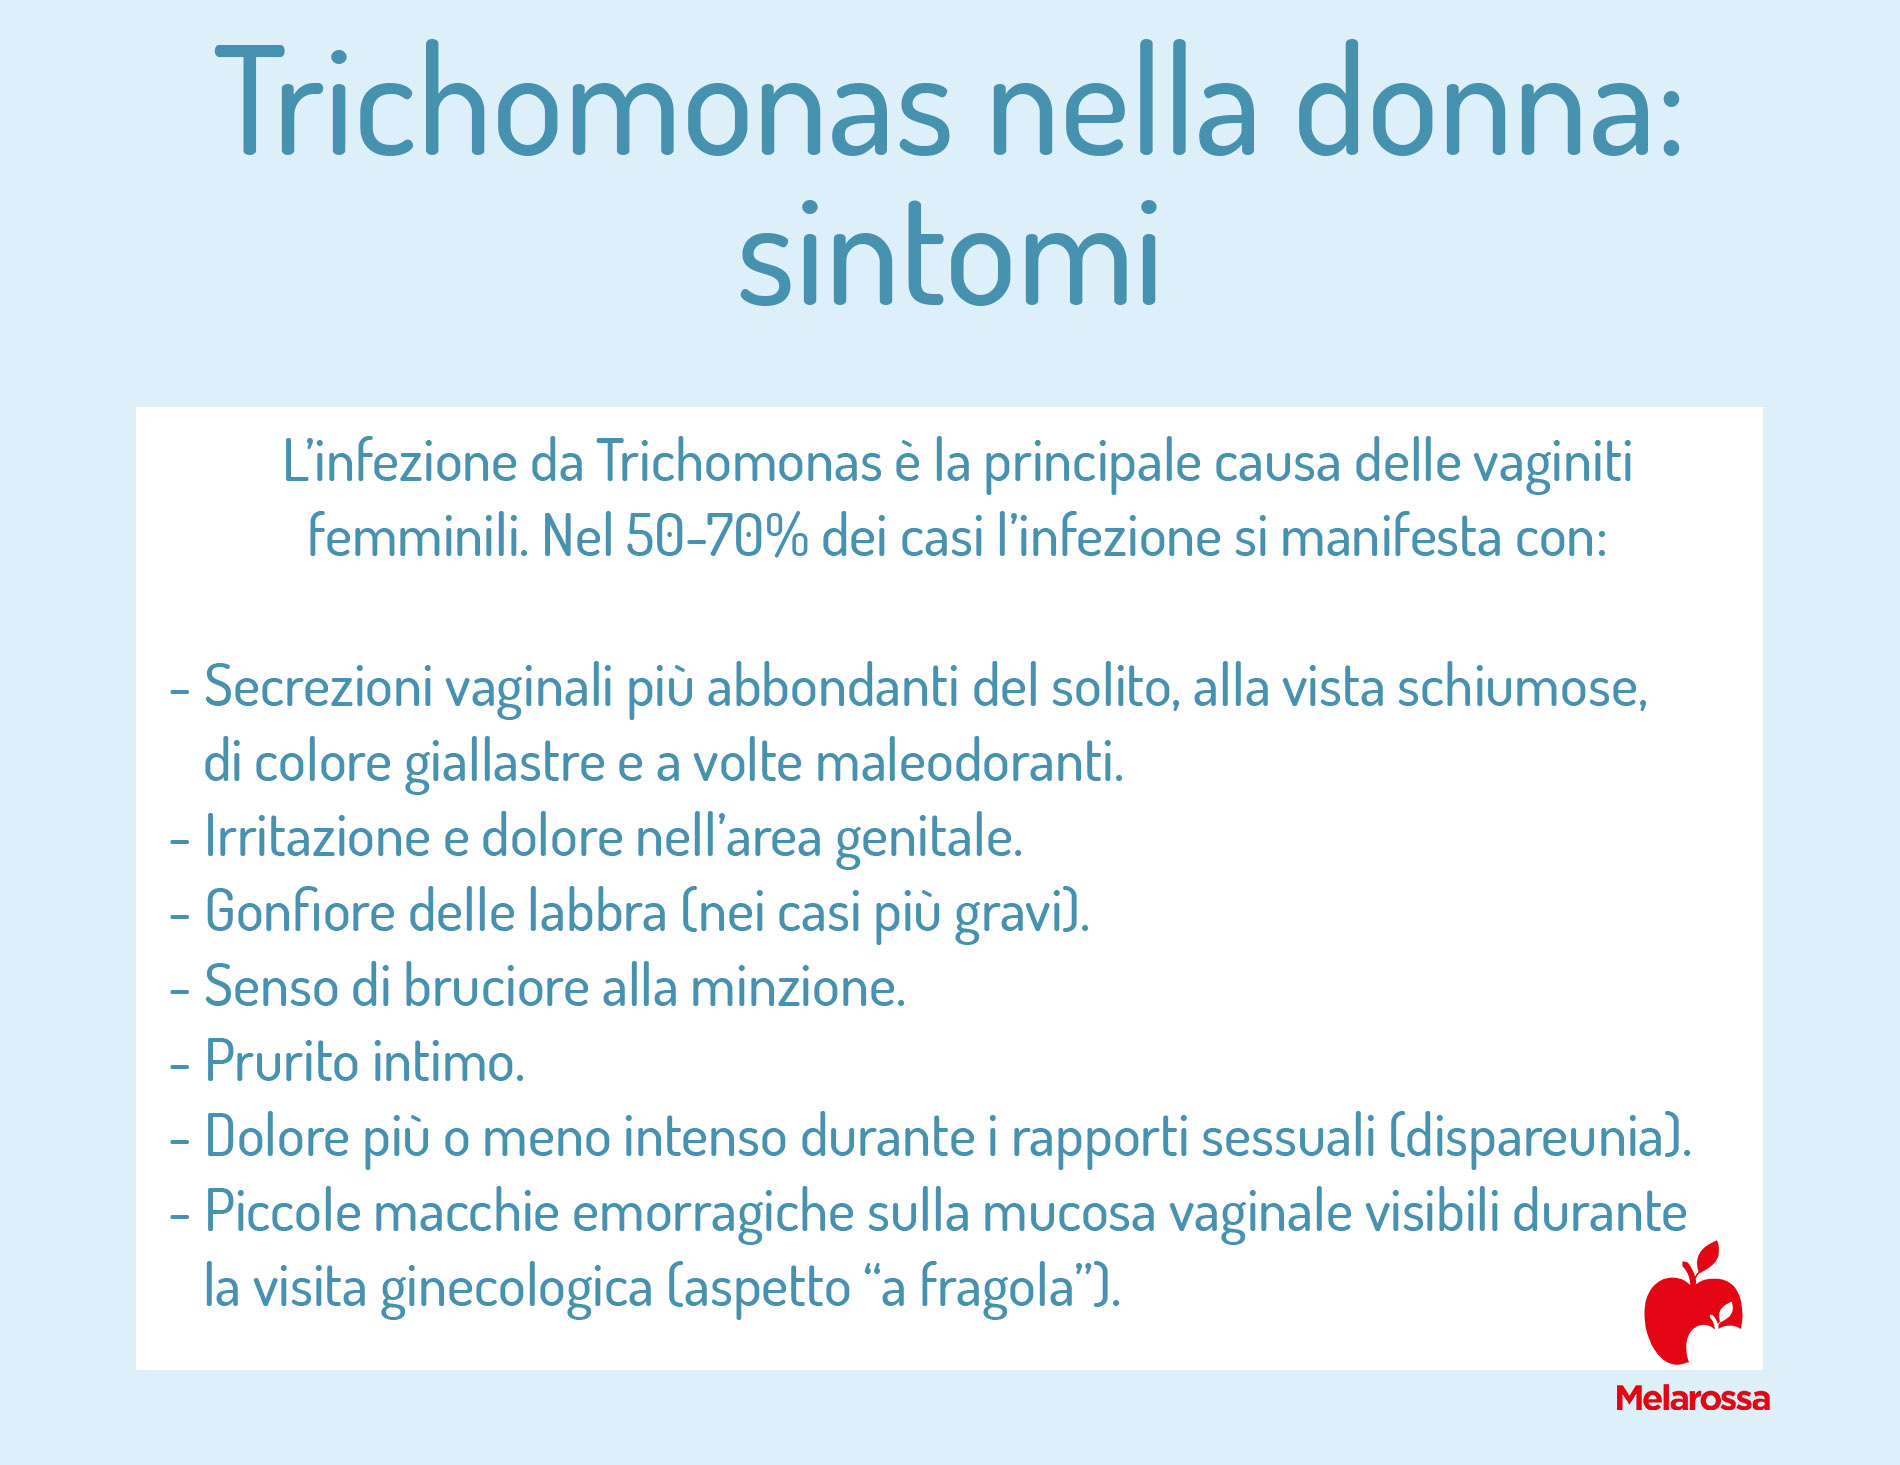 tricomoniasi: sintomi nella donna 